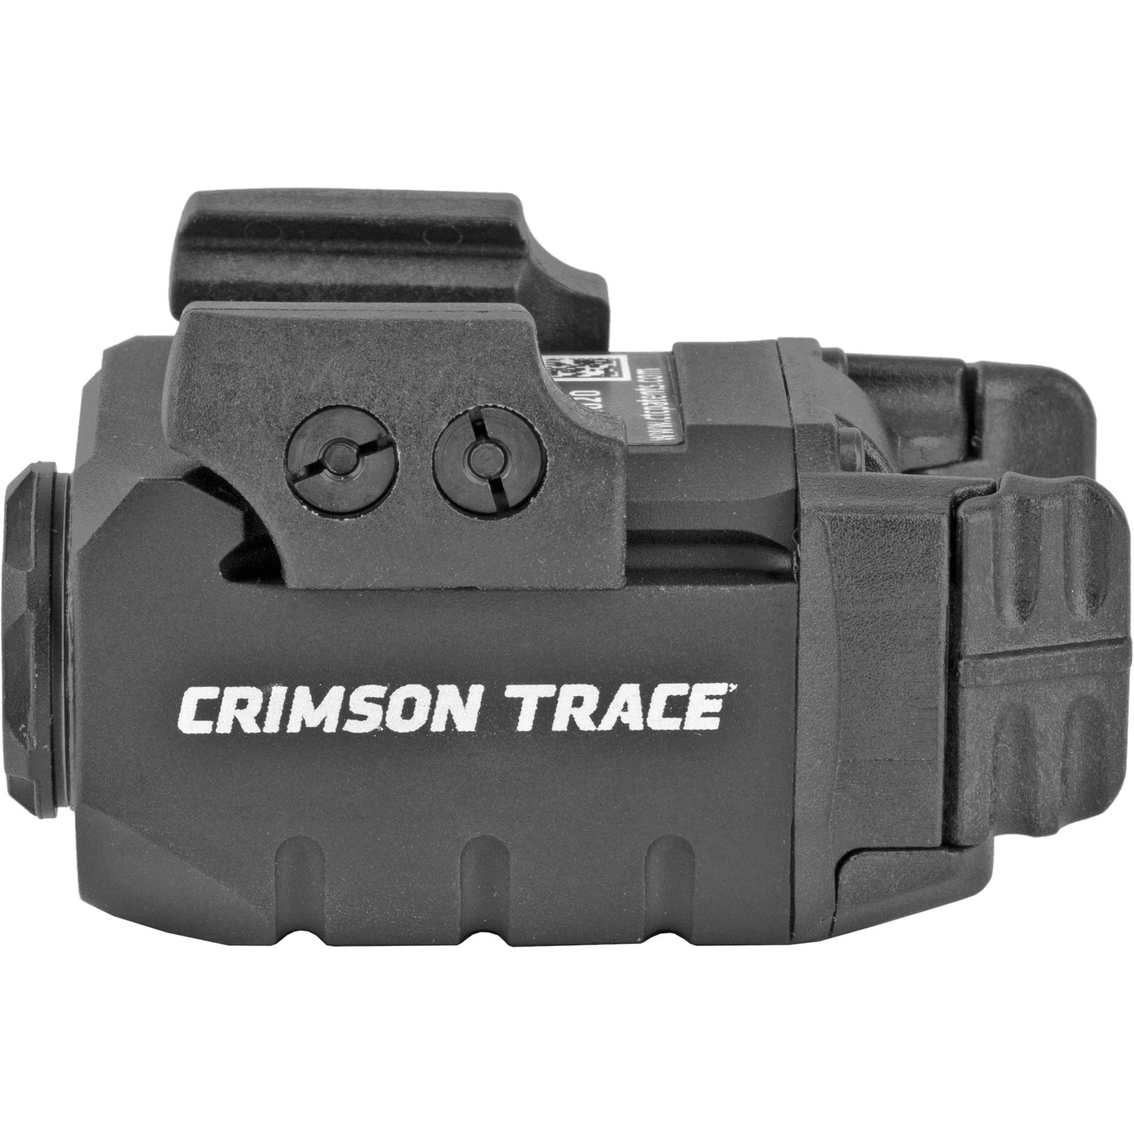 Crimson Trace CMR-204 RailMaster Light/Green Laser Combo, Universal Fit, Black - Image 3 of 3